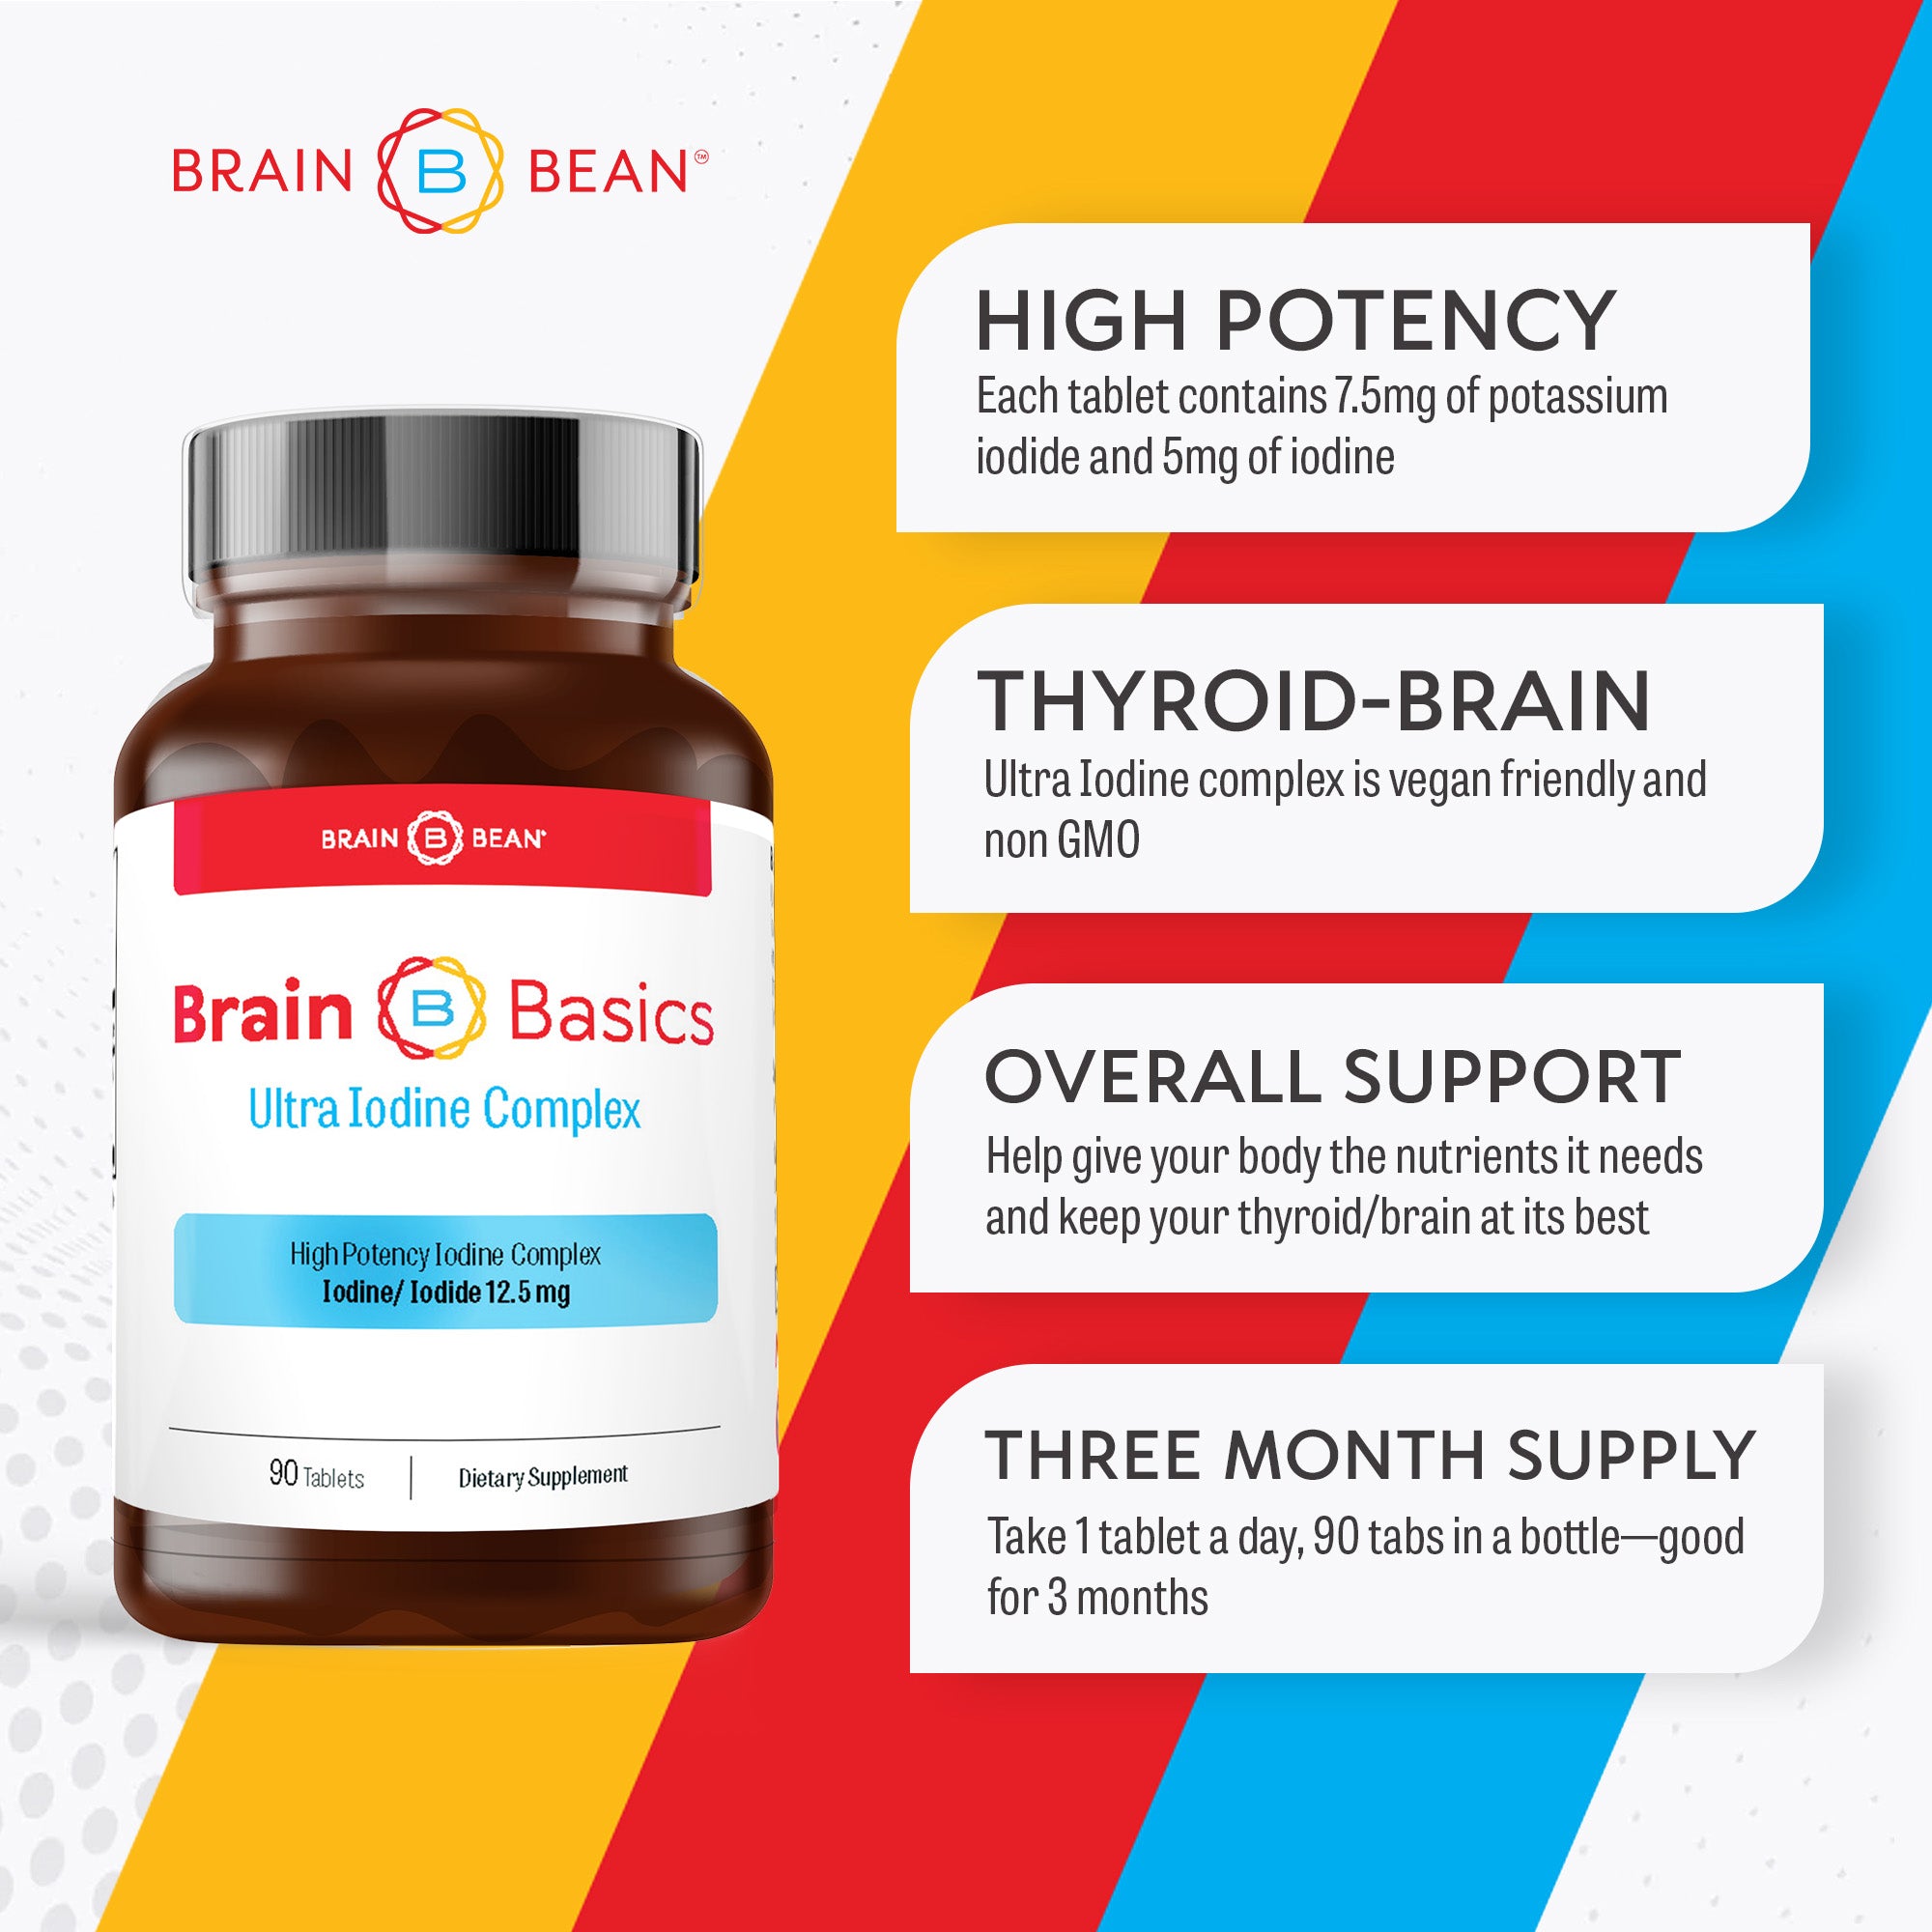 Brain Basics: Ultra Iodine Complex